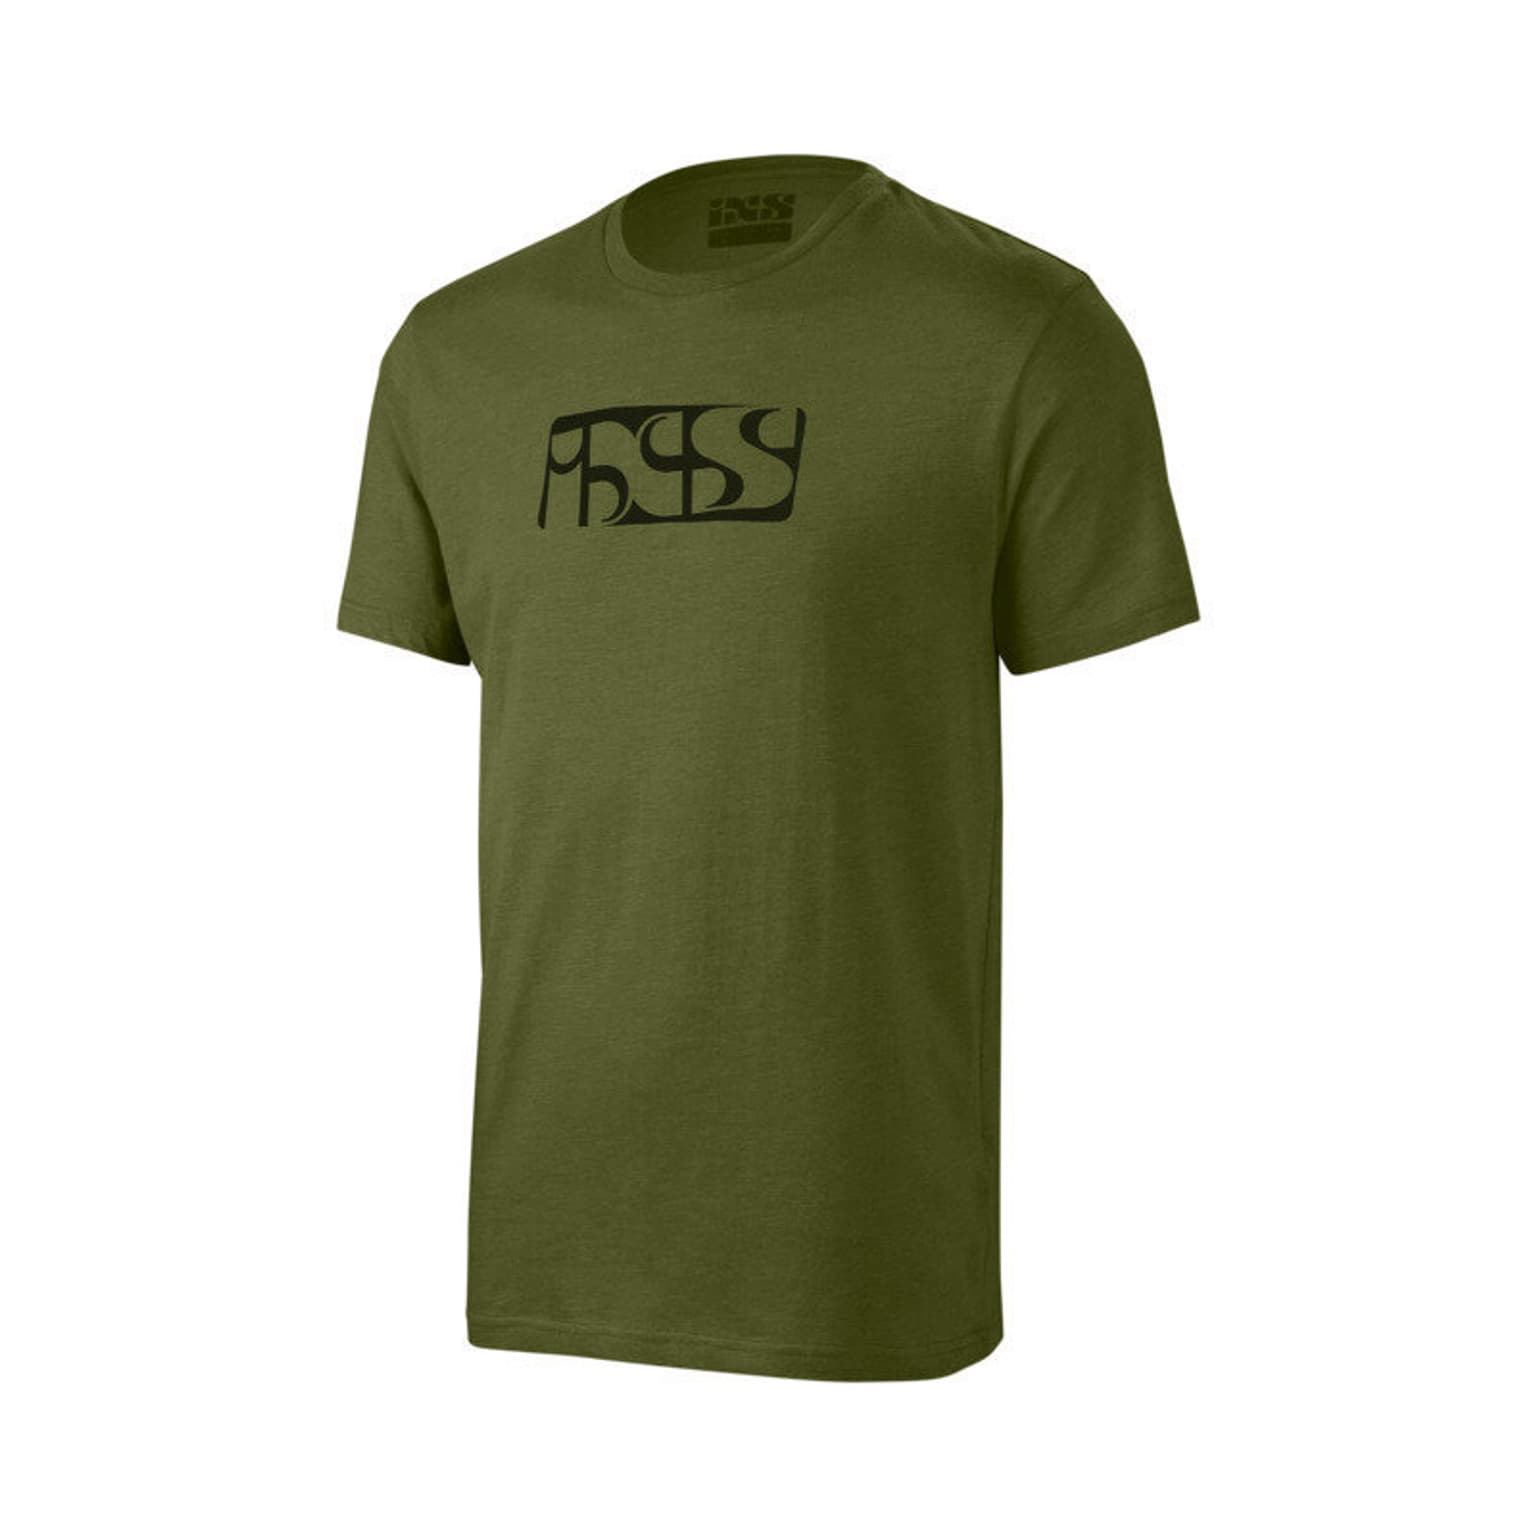 iXS iXS iXS Brand Tee T-shirt oliva 1